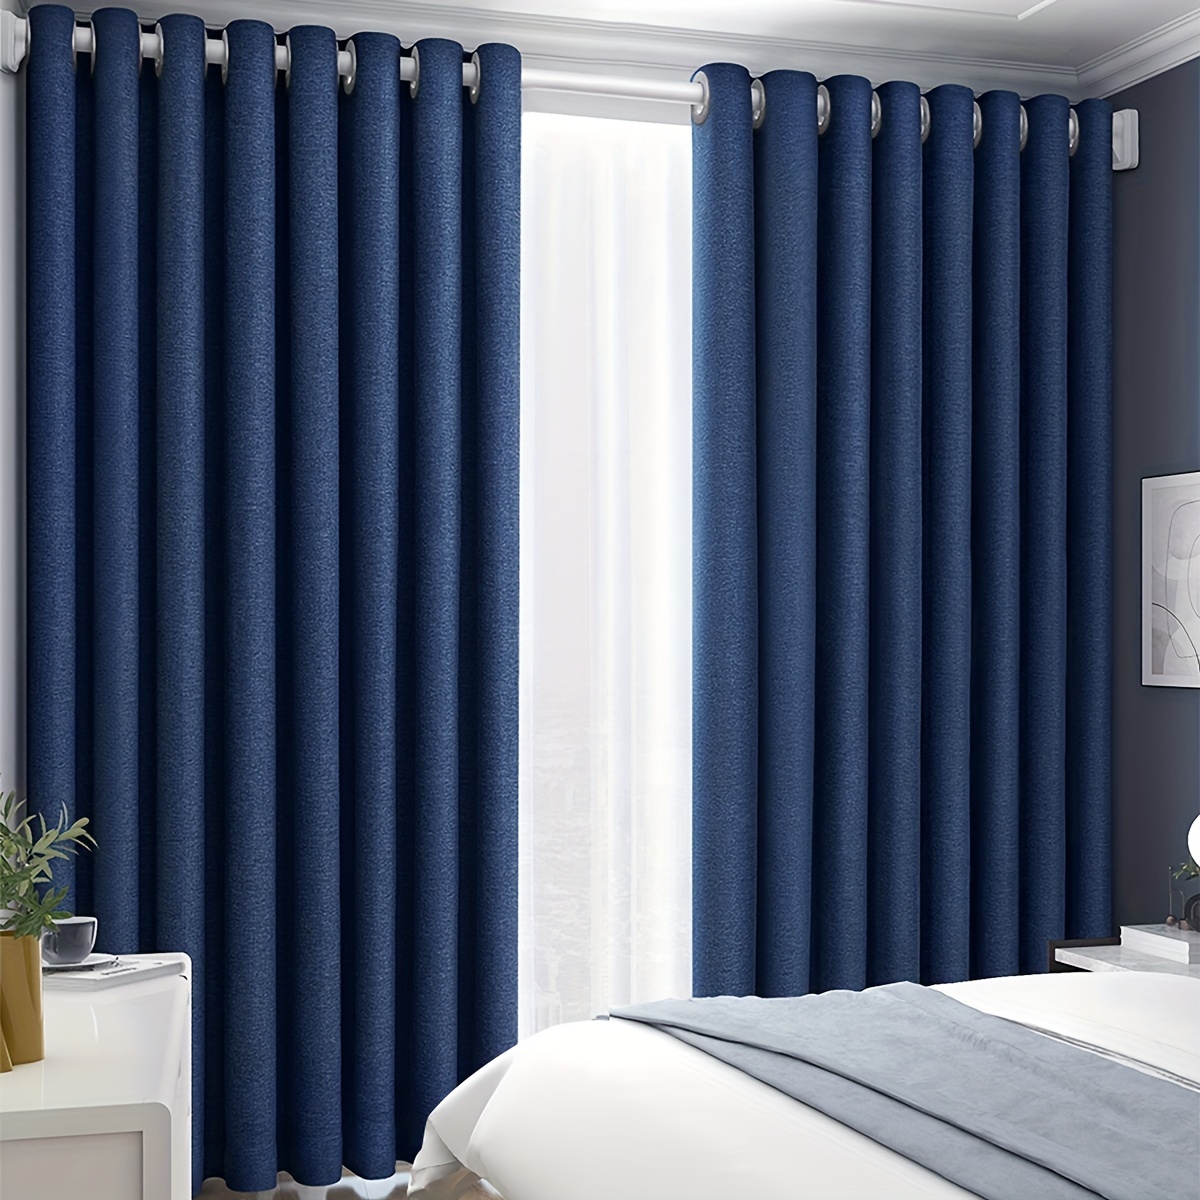 Elegant curtains for big kitchens - Cortinas elegantes para